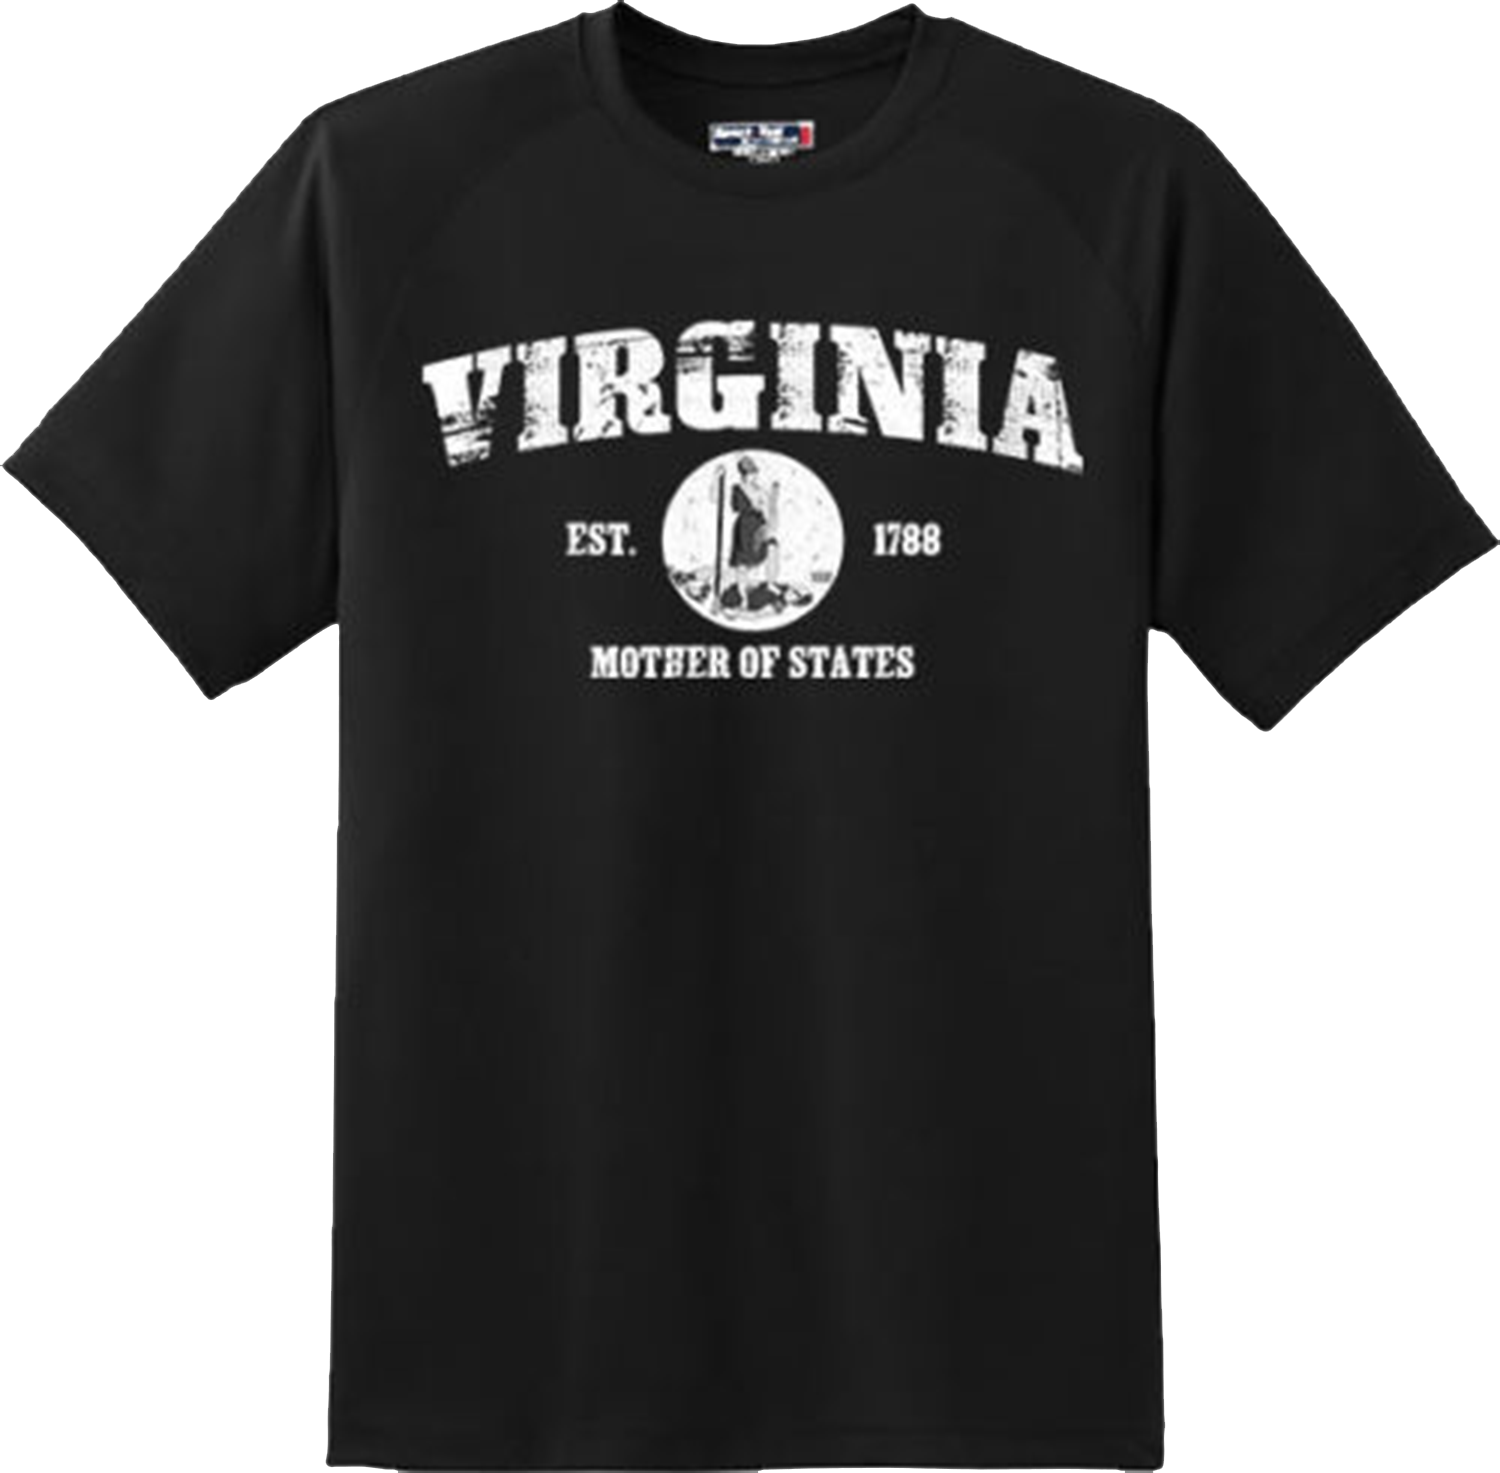 Virginia State Vintage Retro Hometown America Gift T Shirt New Graphic Tee